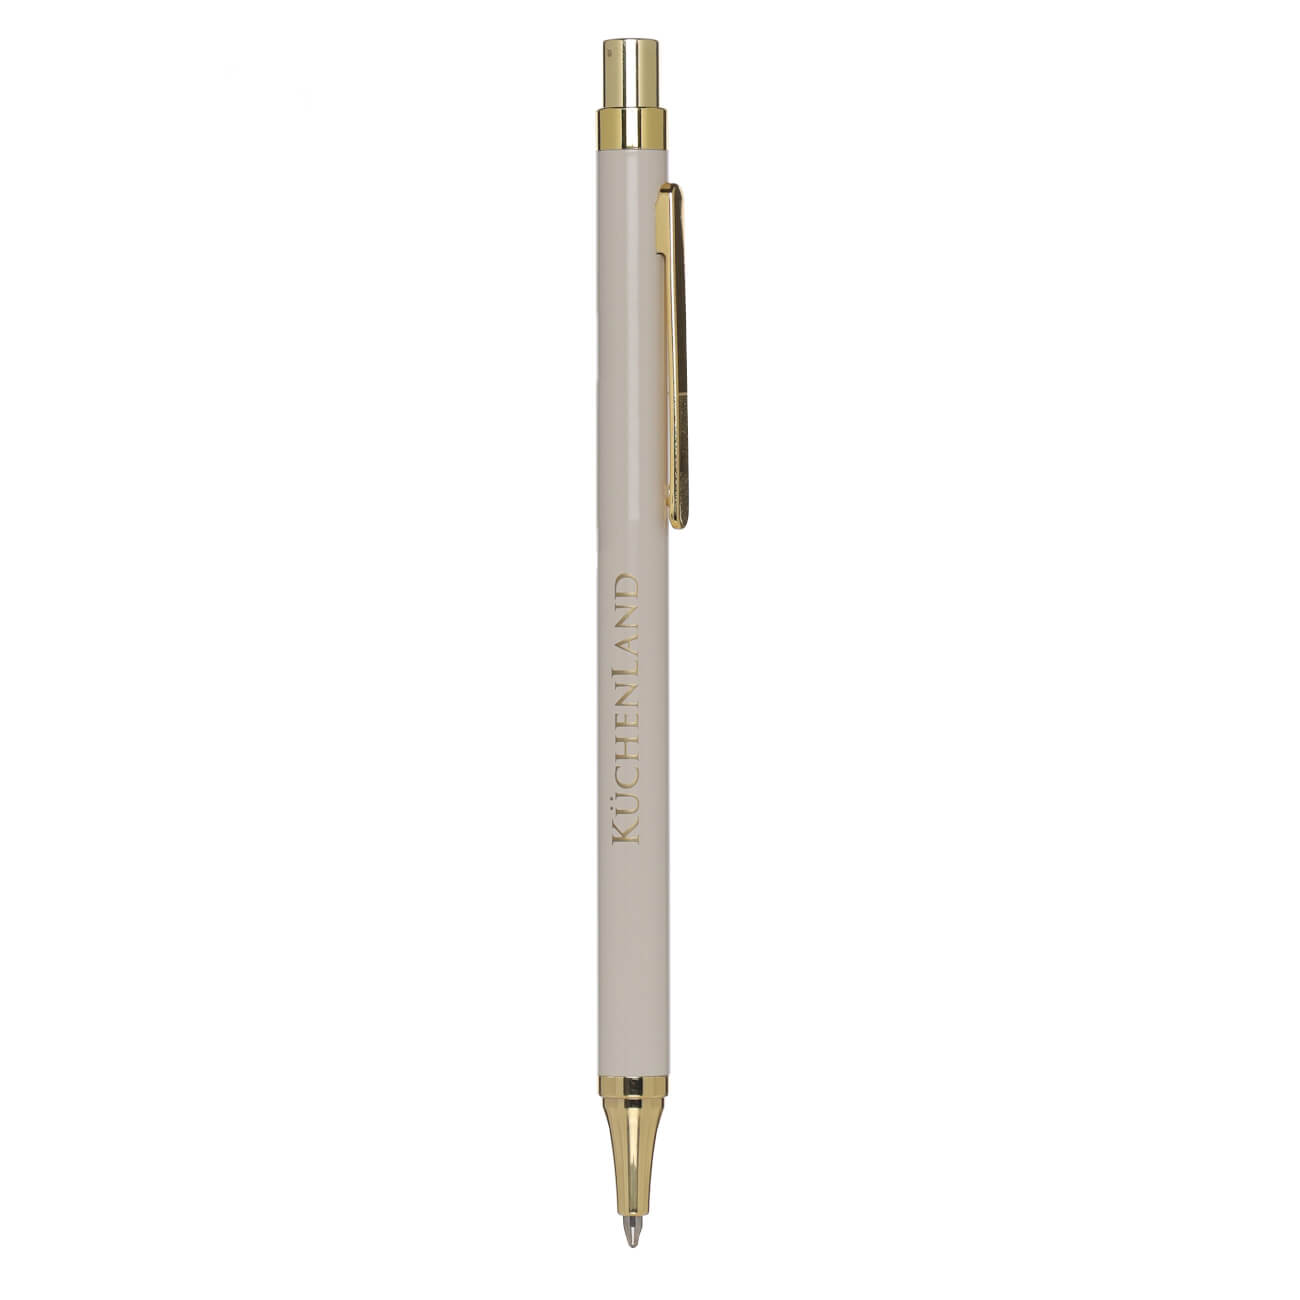 Ручка шариковая, 14 см, металл/пластик, бежевая, Eclipse ручка doorlock